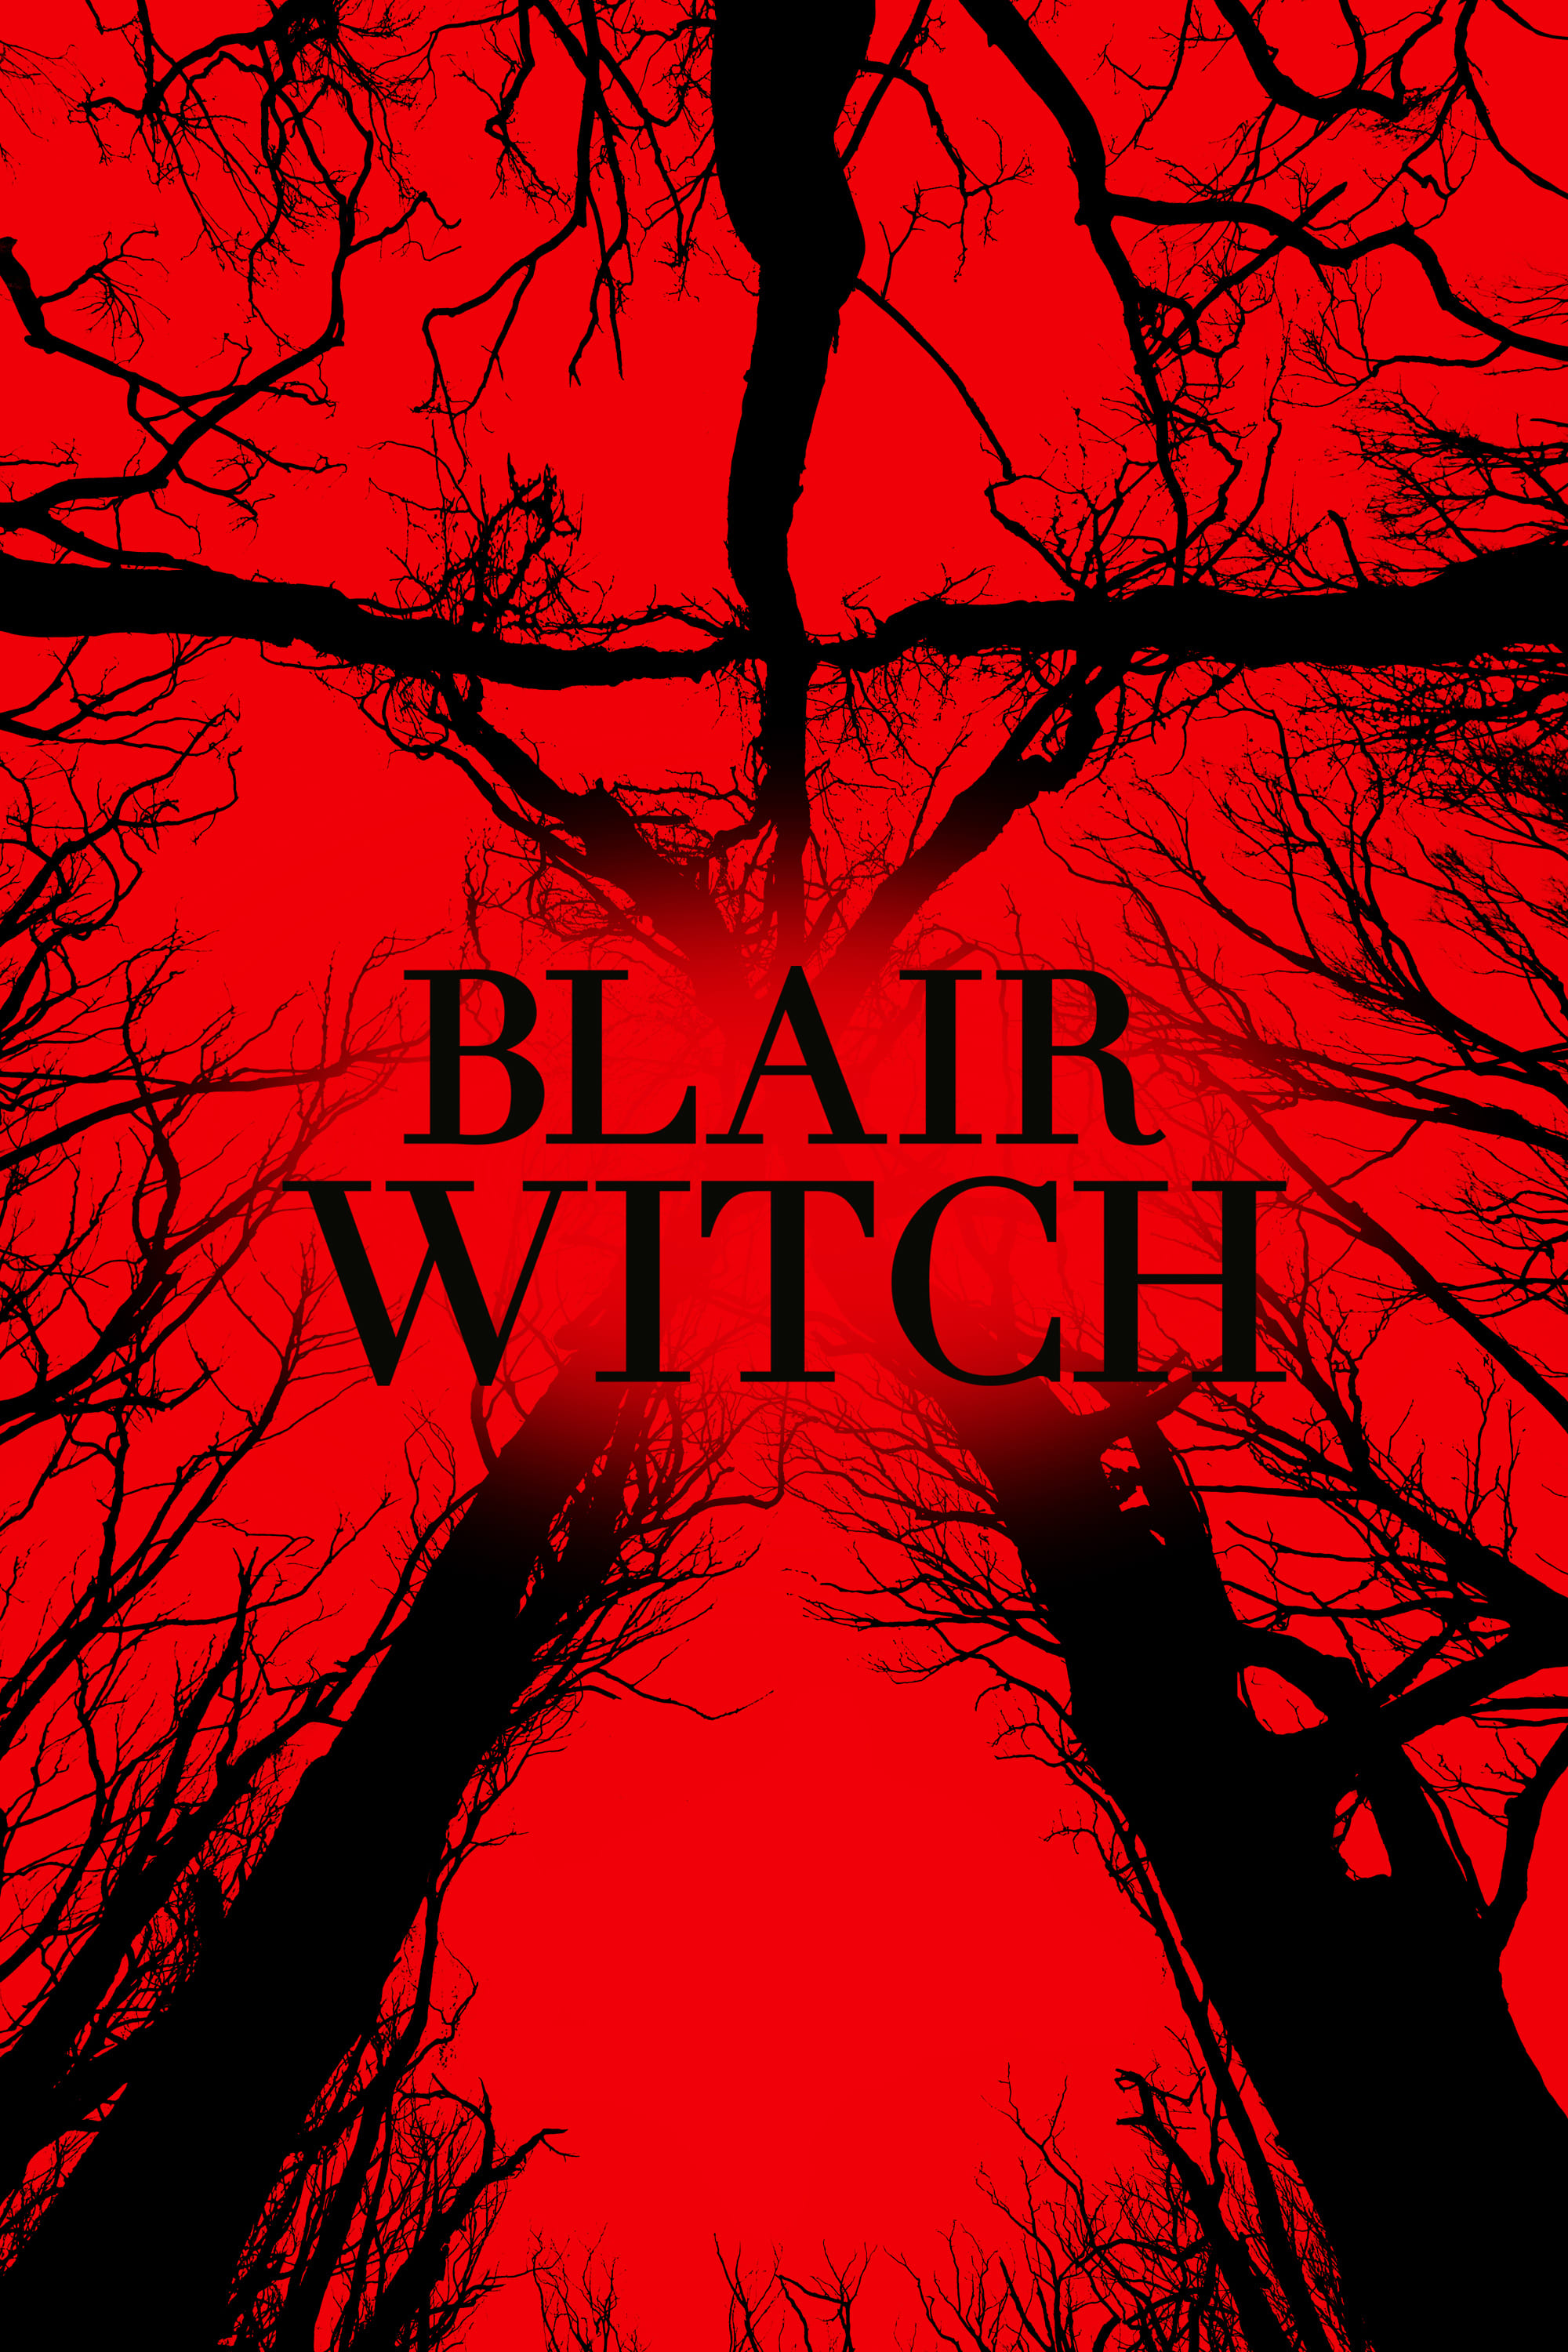 Caratula de BLAIR WITCH (Blair Witch) 